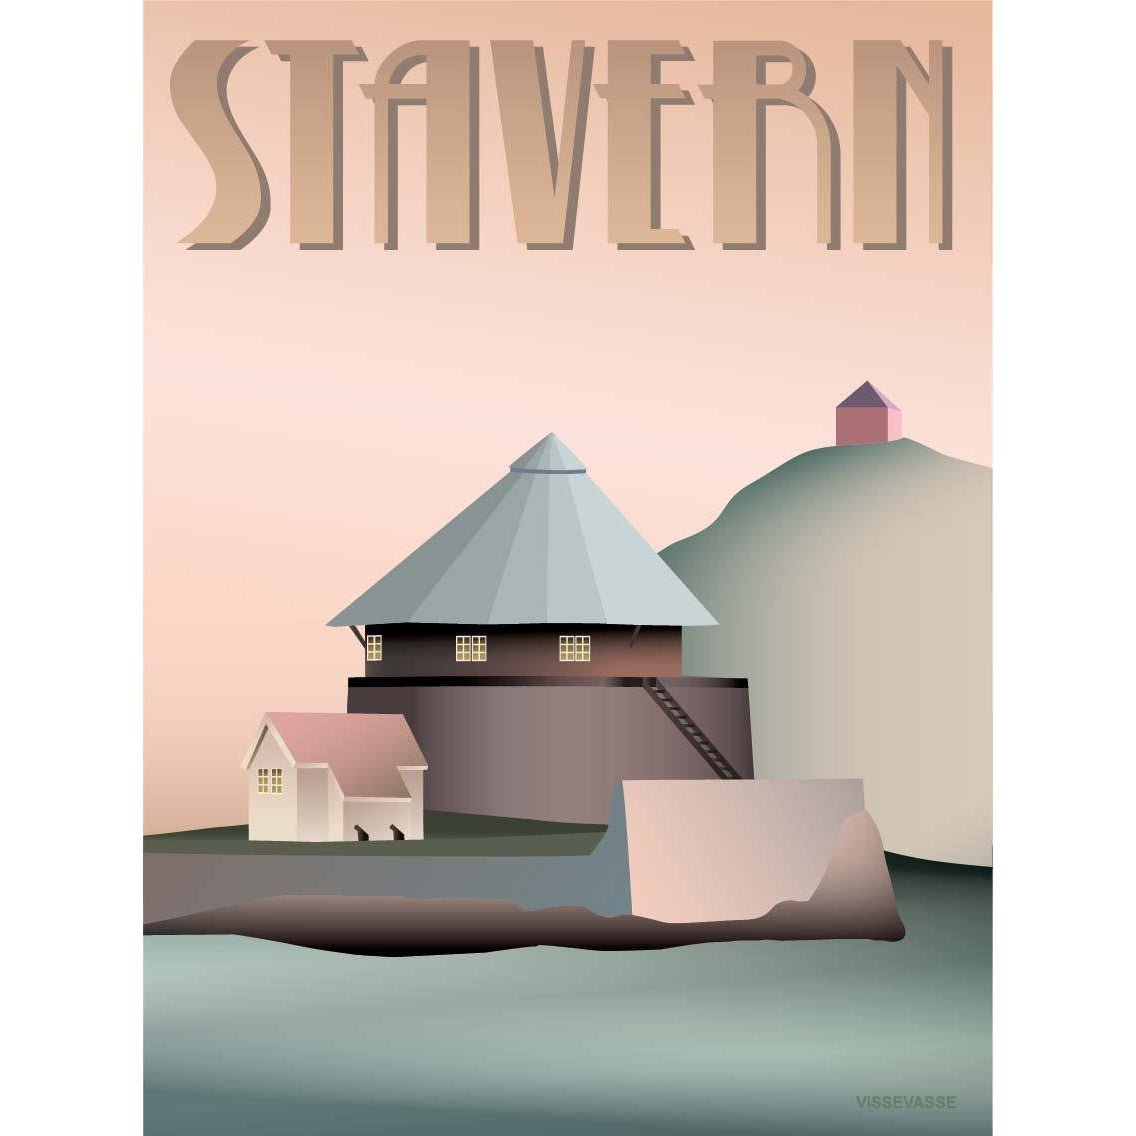 Vissevasse Stavern Citadel Records, 15 x21 cm